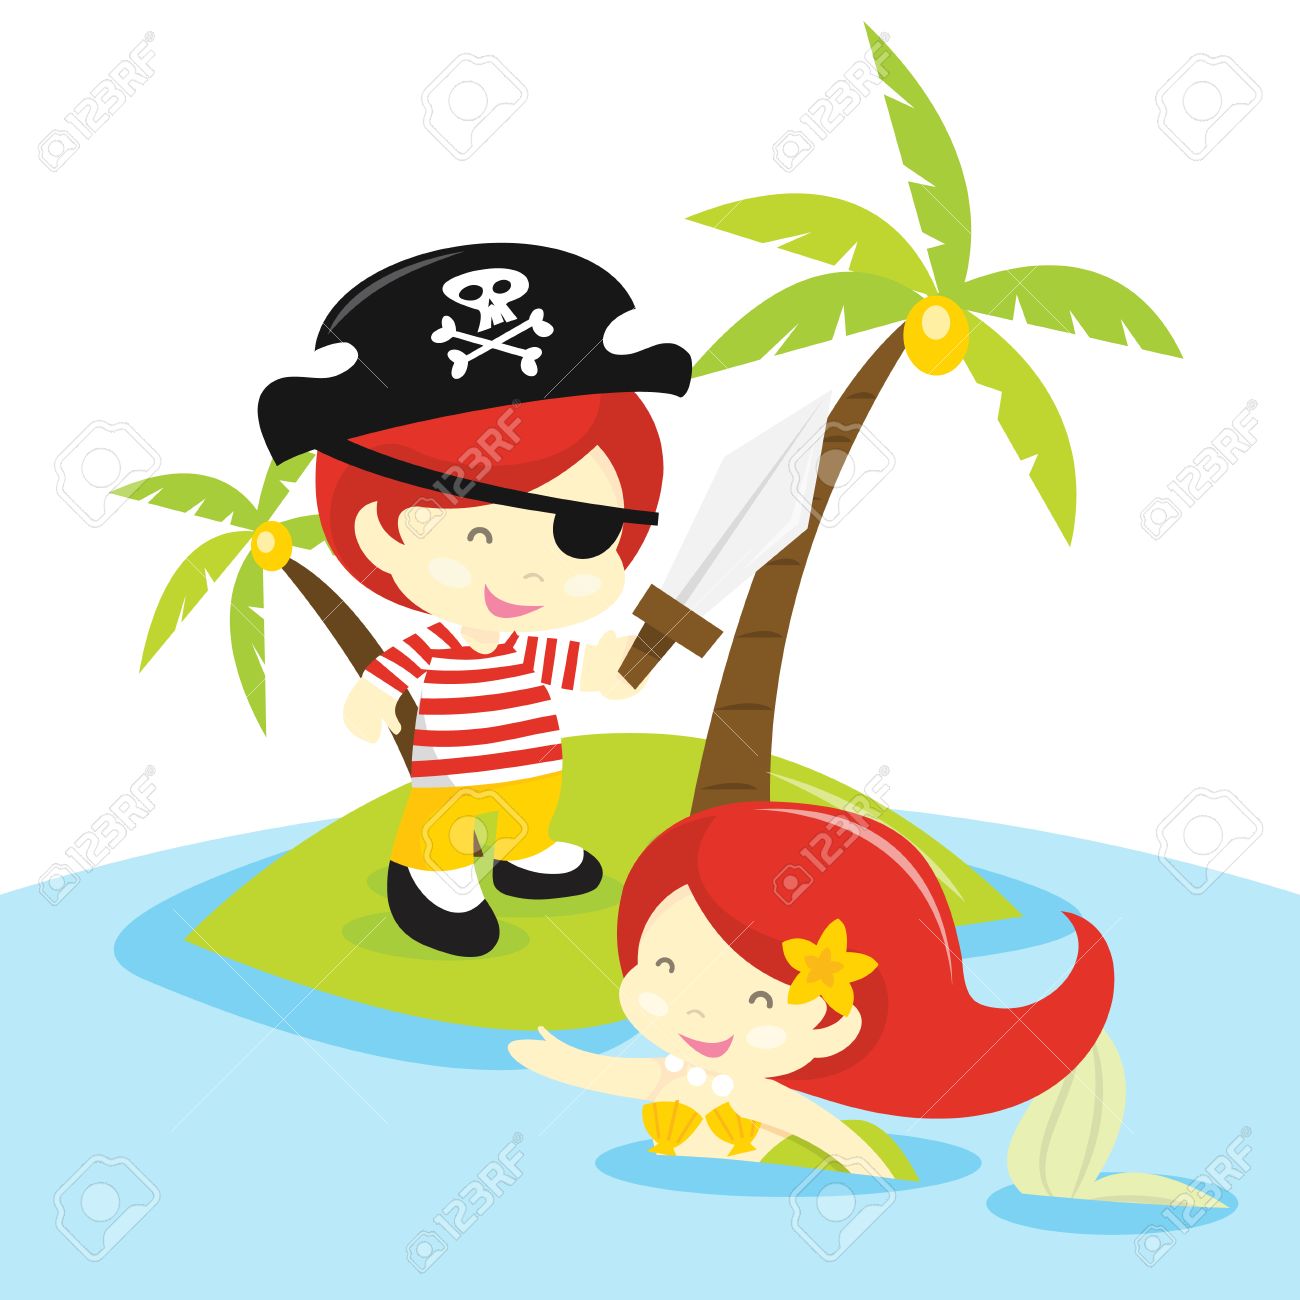 Pirate and mermaid.